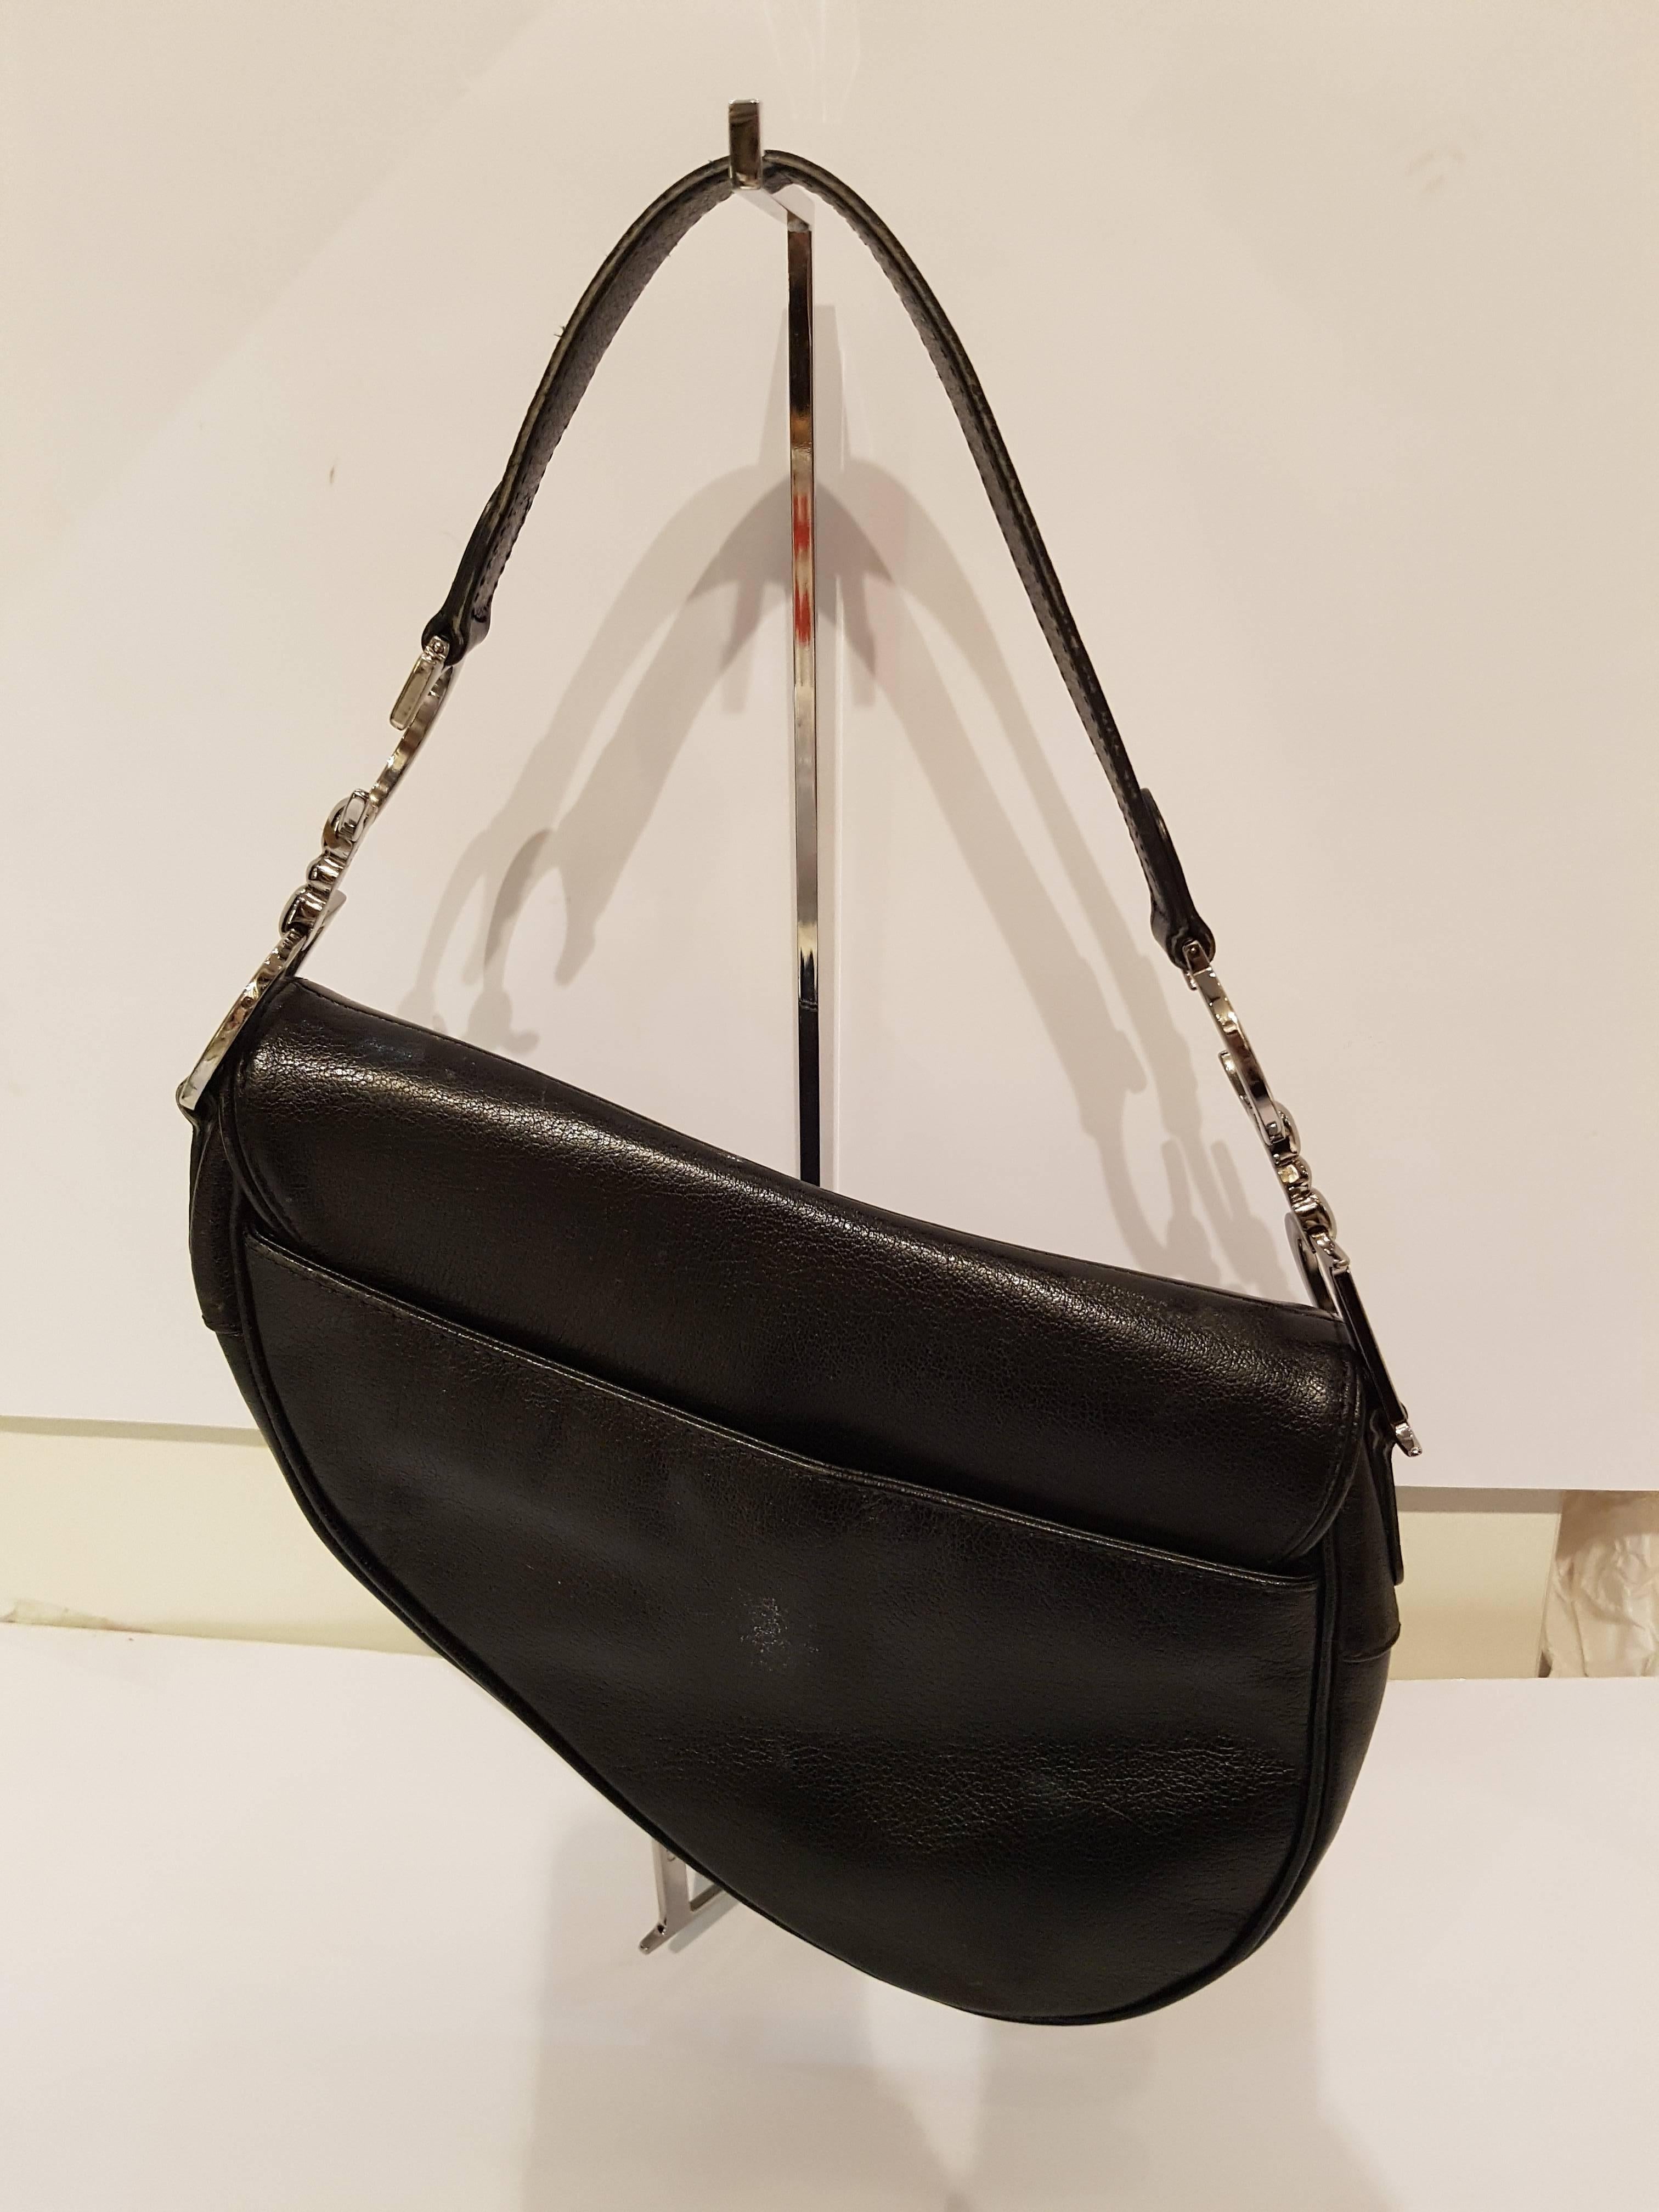 Women's Christian Dior Black Leather bag